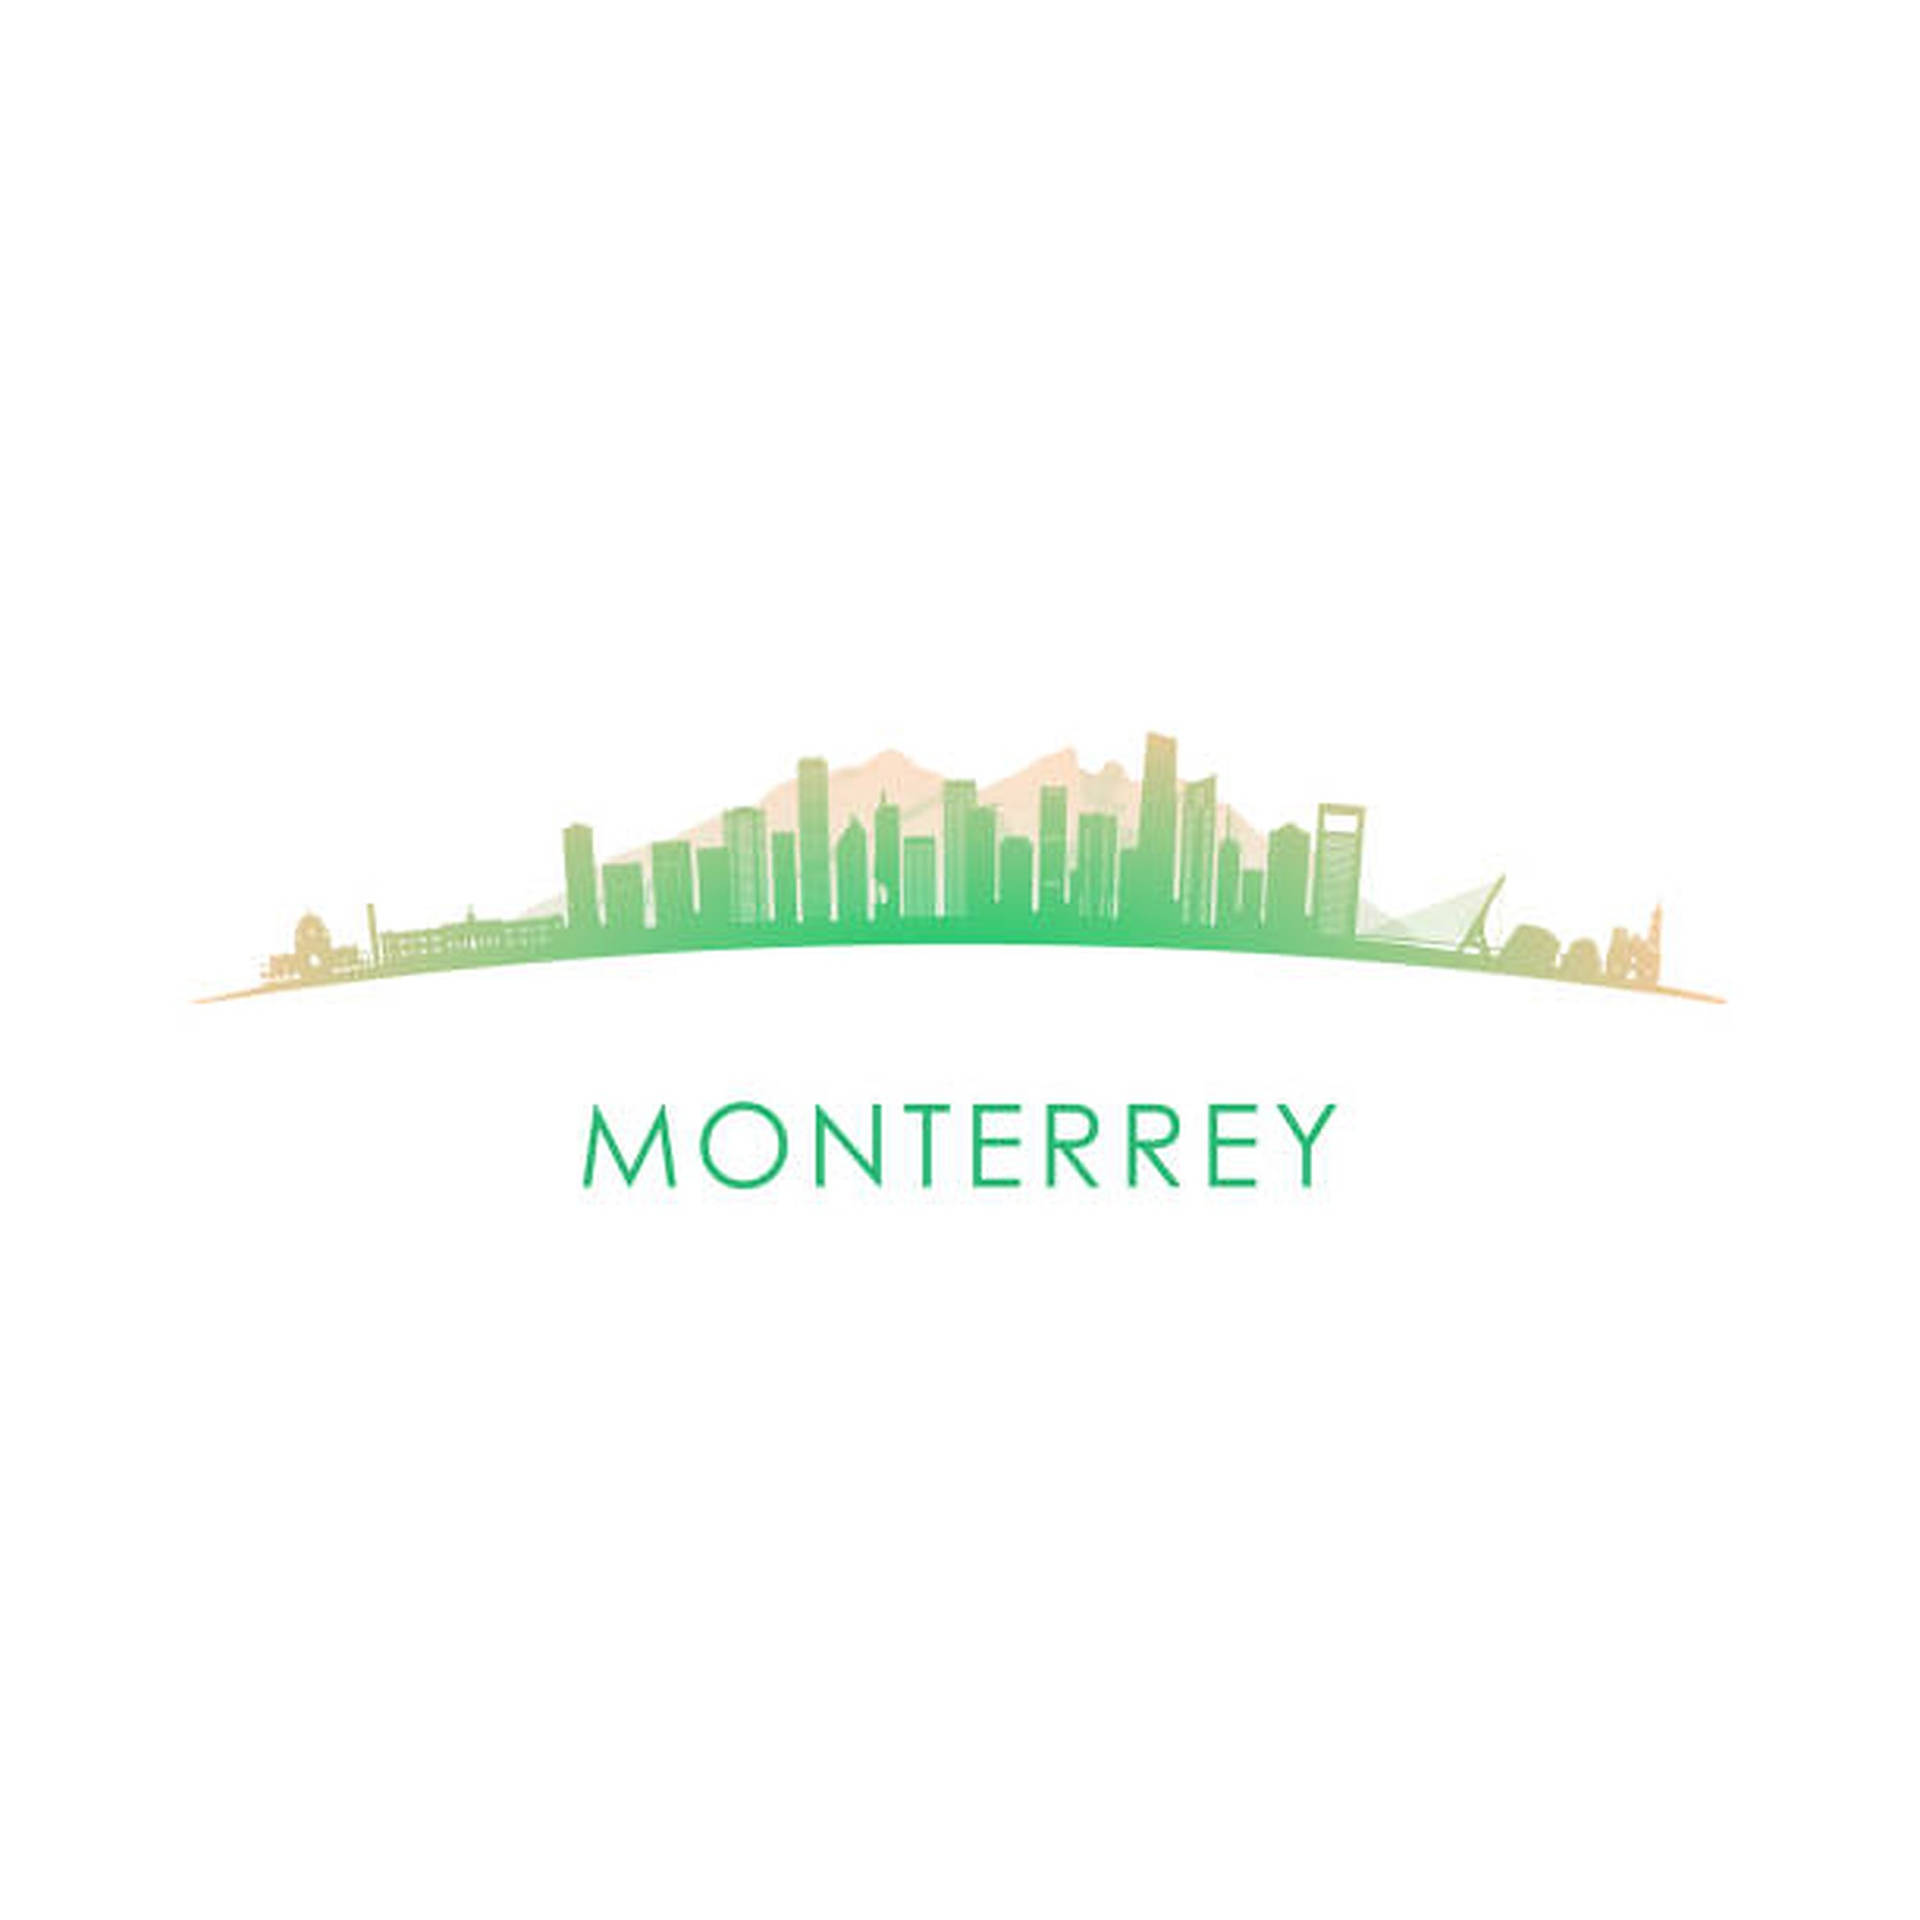 Monterrey Digital Artwork Wallpaper